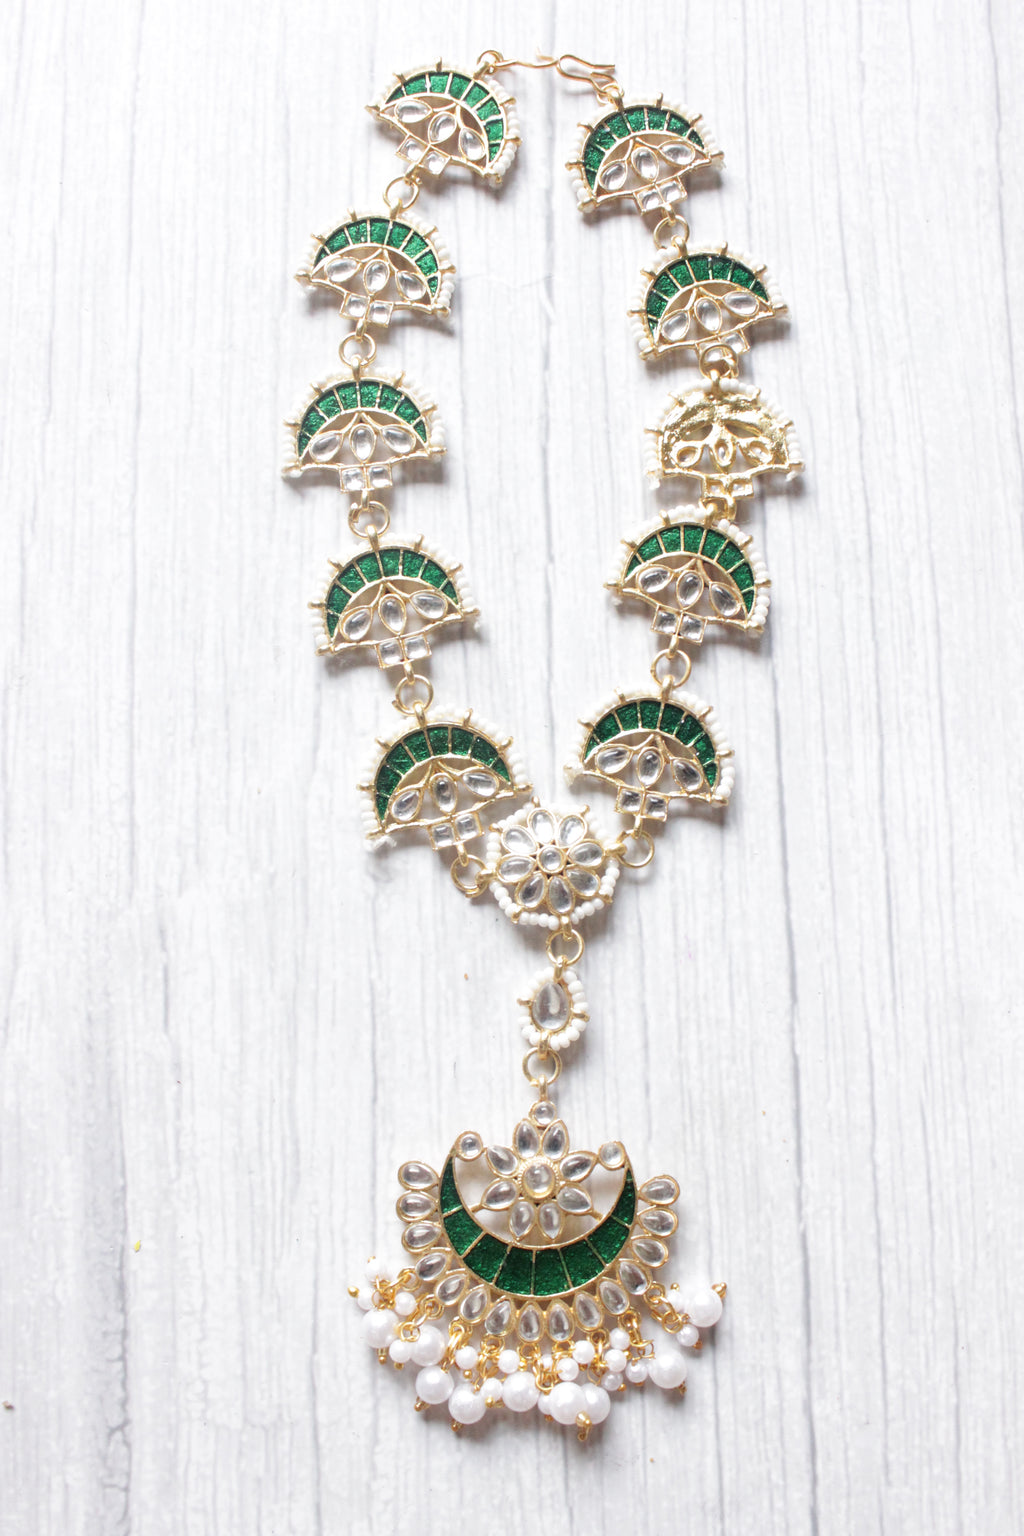 Matte Finish Temple Jewellery Choker Necklace Set for Women / Girl –